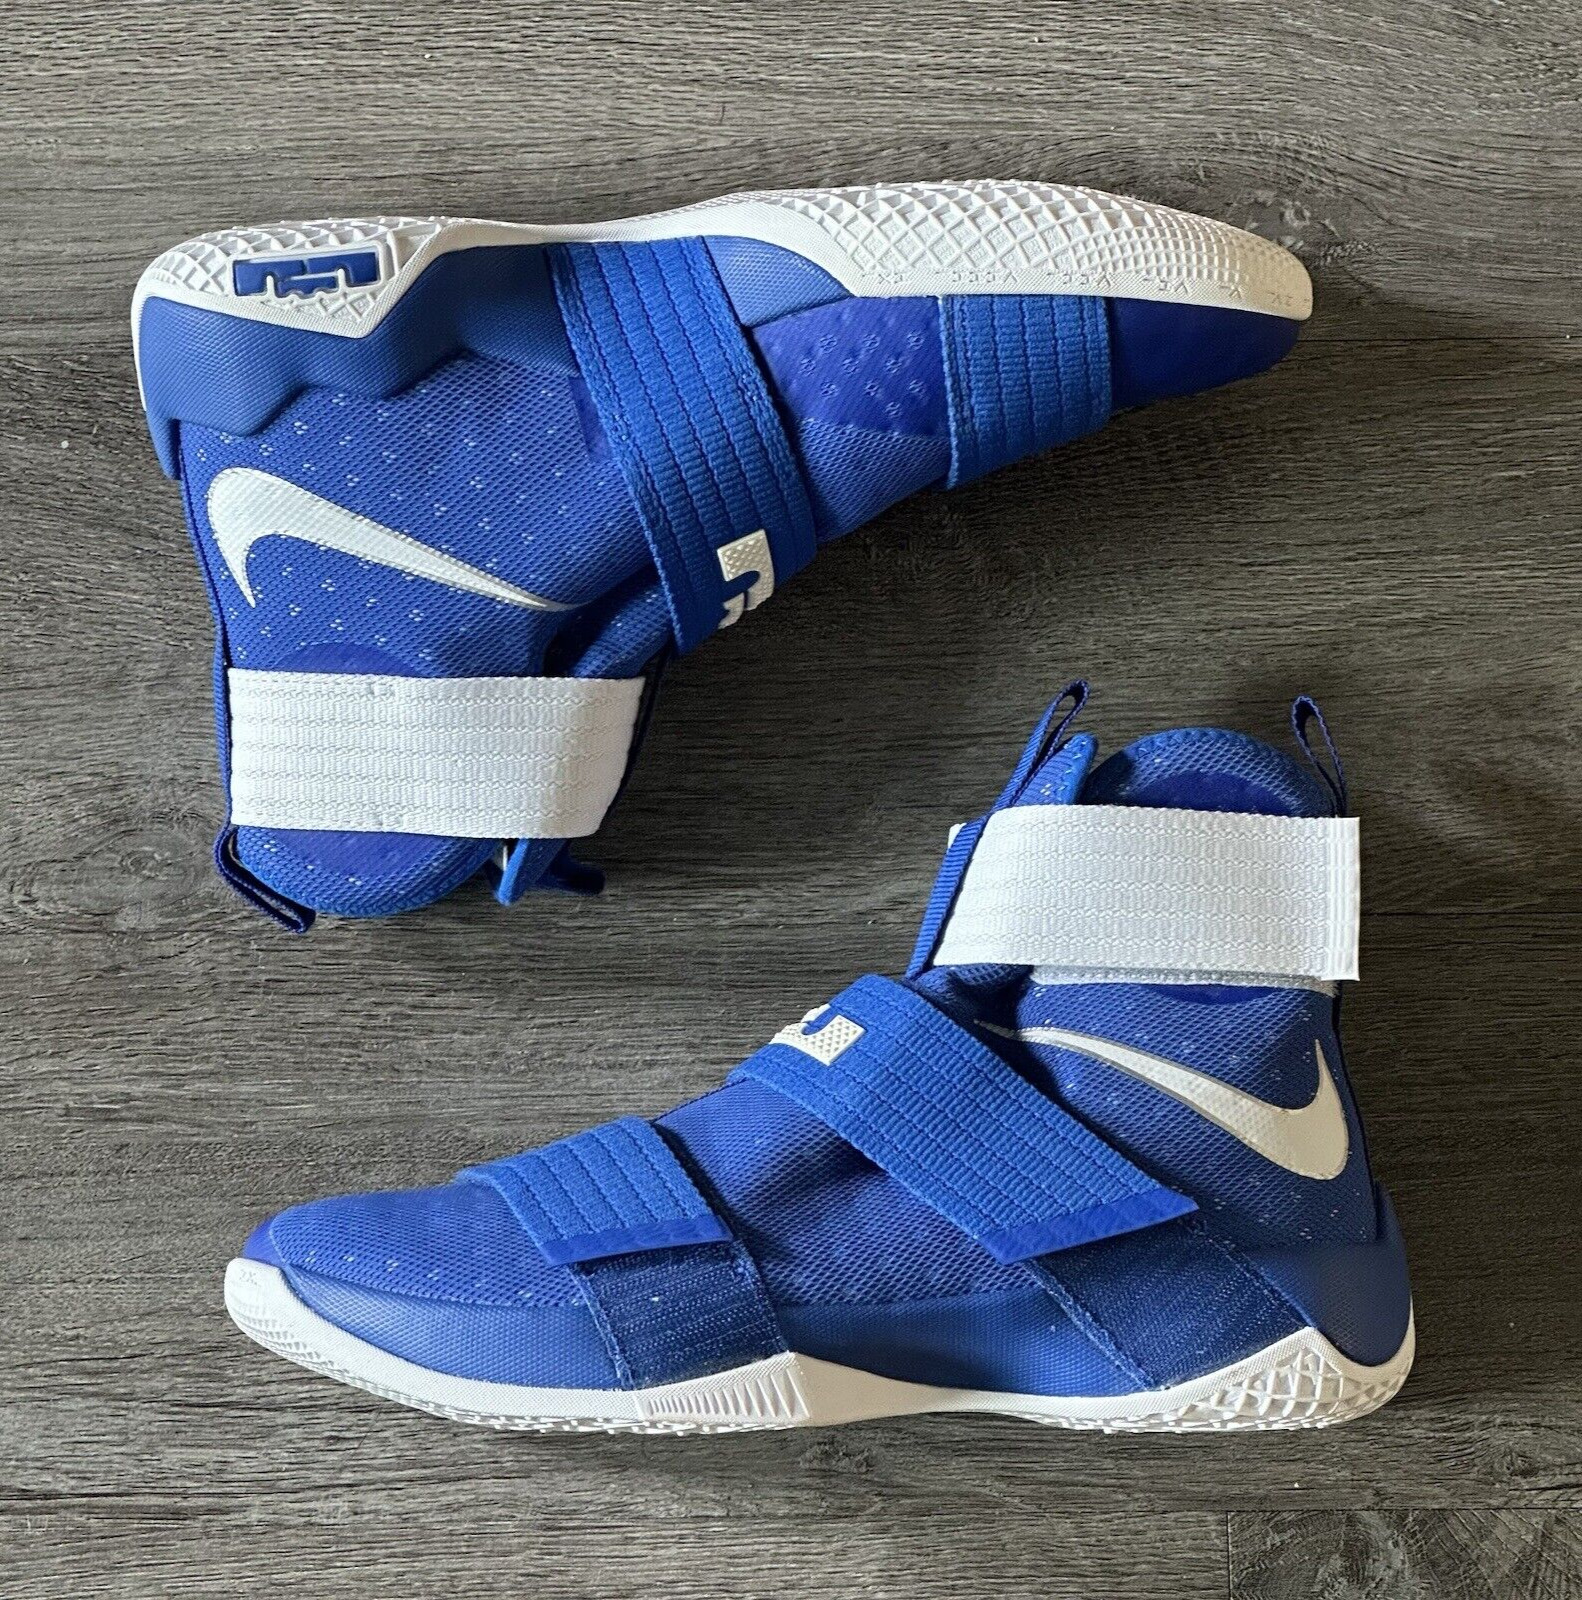 Nice Nike Lebron Zoom Soldier 10 Mens Basketball Shoes Royal Blue 844380-402 Size 9 on eBay